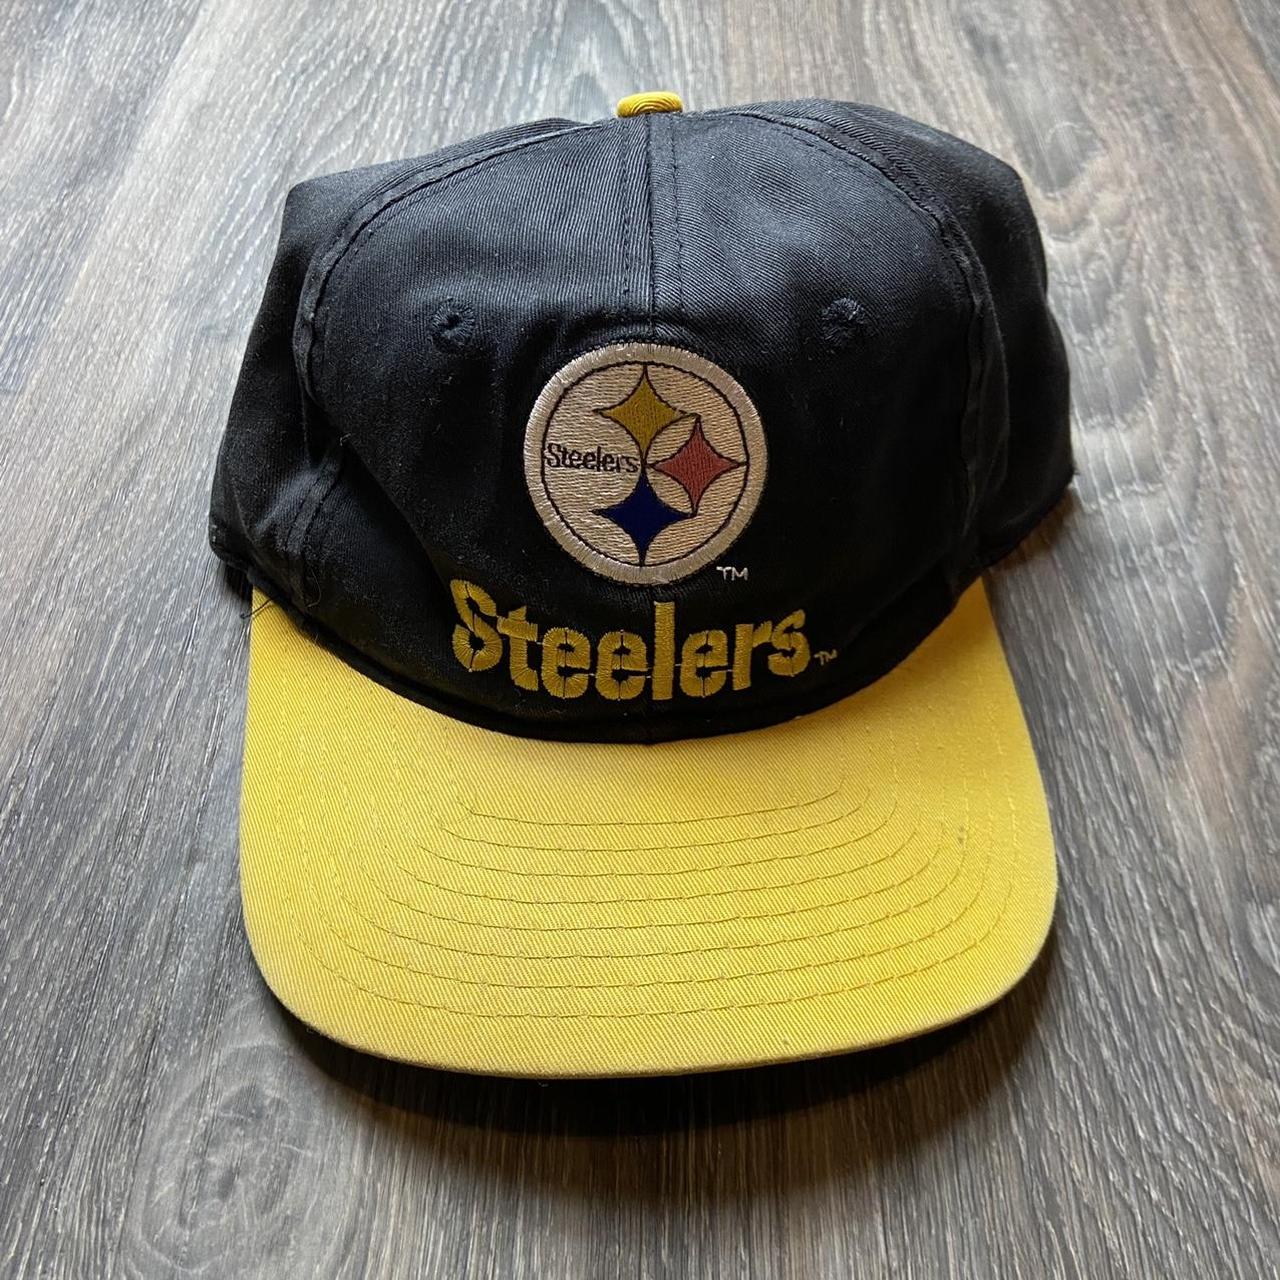 Product Image 1 - Vintage 90’s NFL Steelers hat